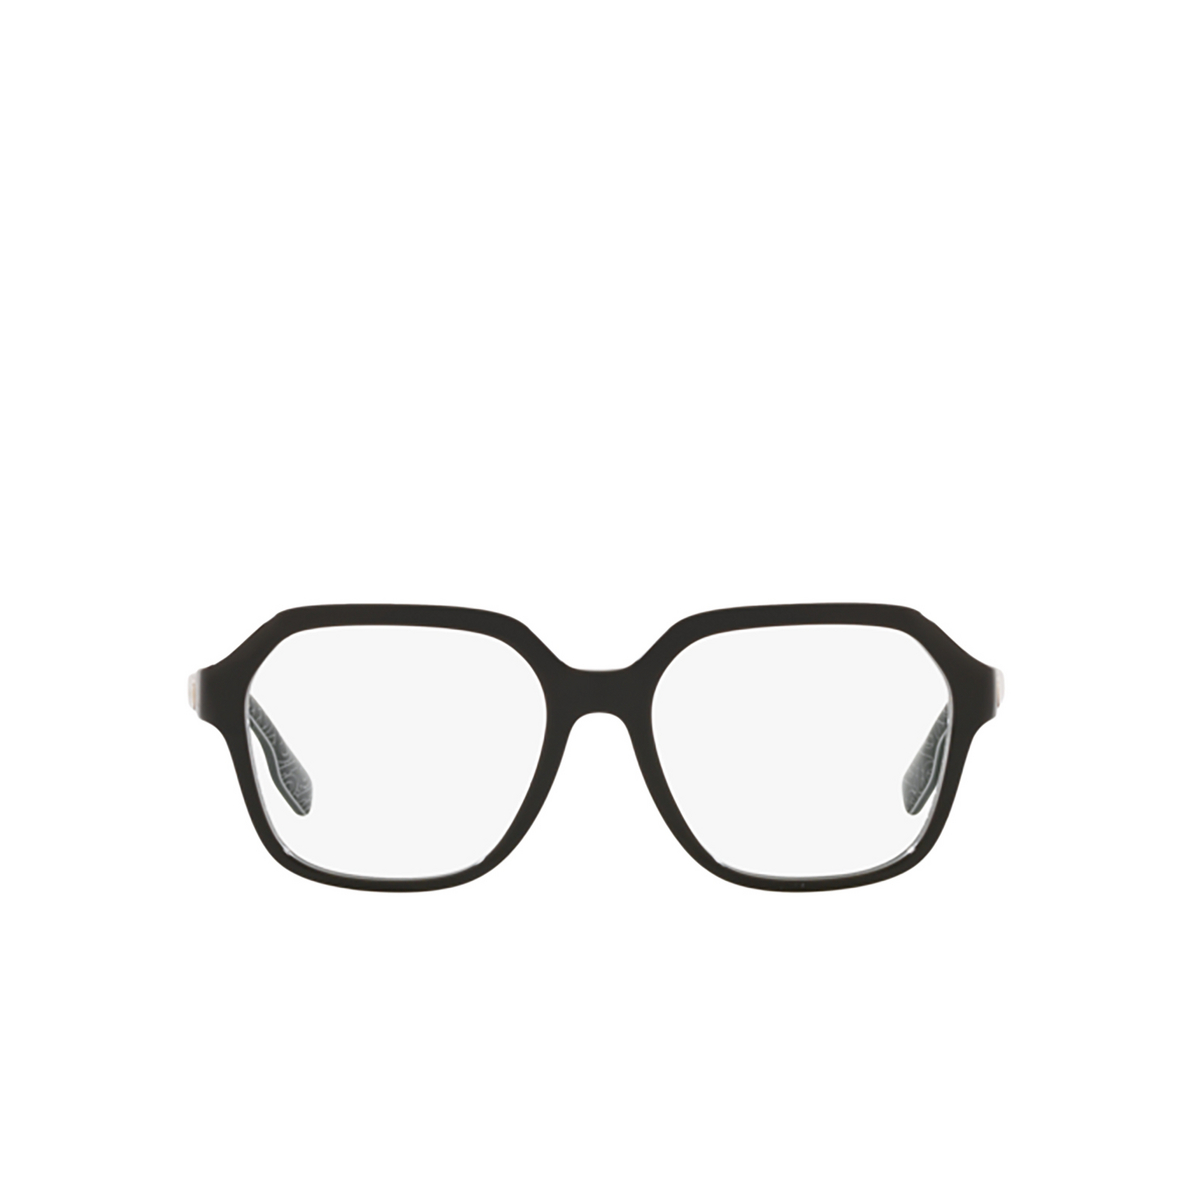 Burberry ISABELLA Eyeglasses 3977 Black / Print Tb / Crystal - front view